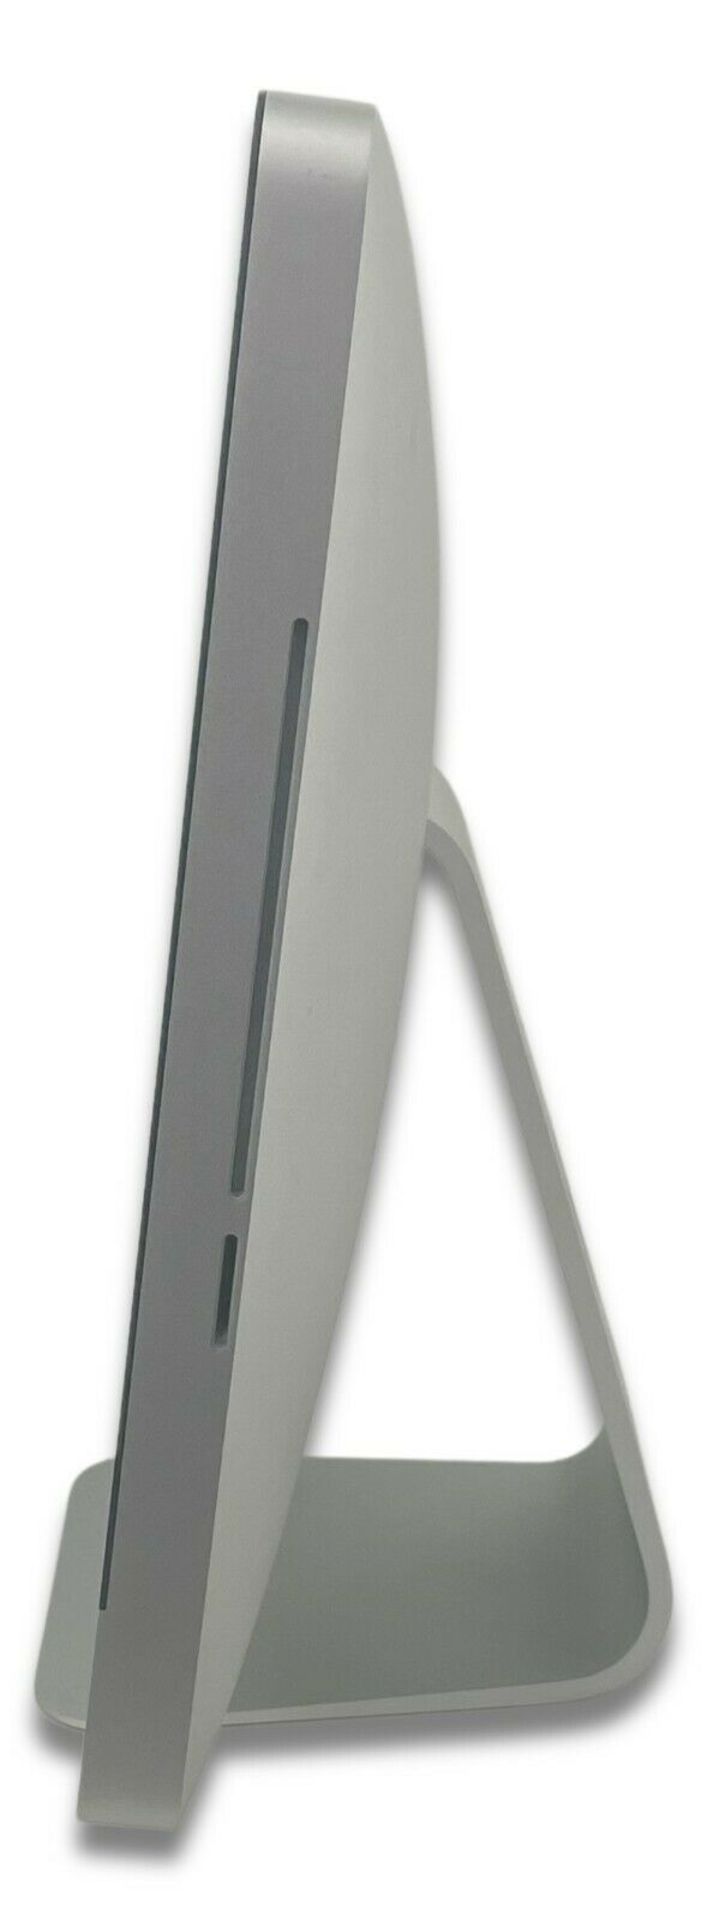 Apple iMac 21.5” OS X High Sierra Intel Core i3 8GB Memory 500GB HD Radeon WiFi Bluetooth Office - Image 2 of 3